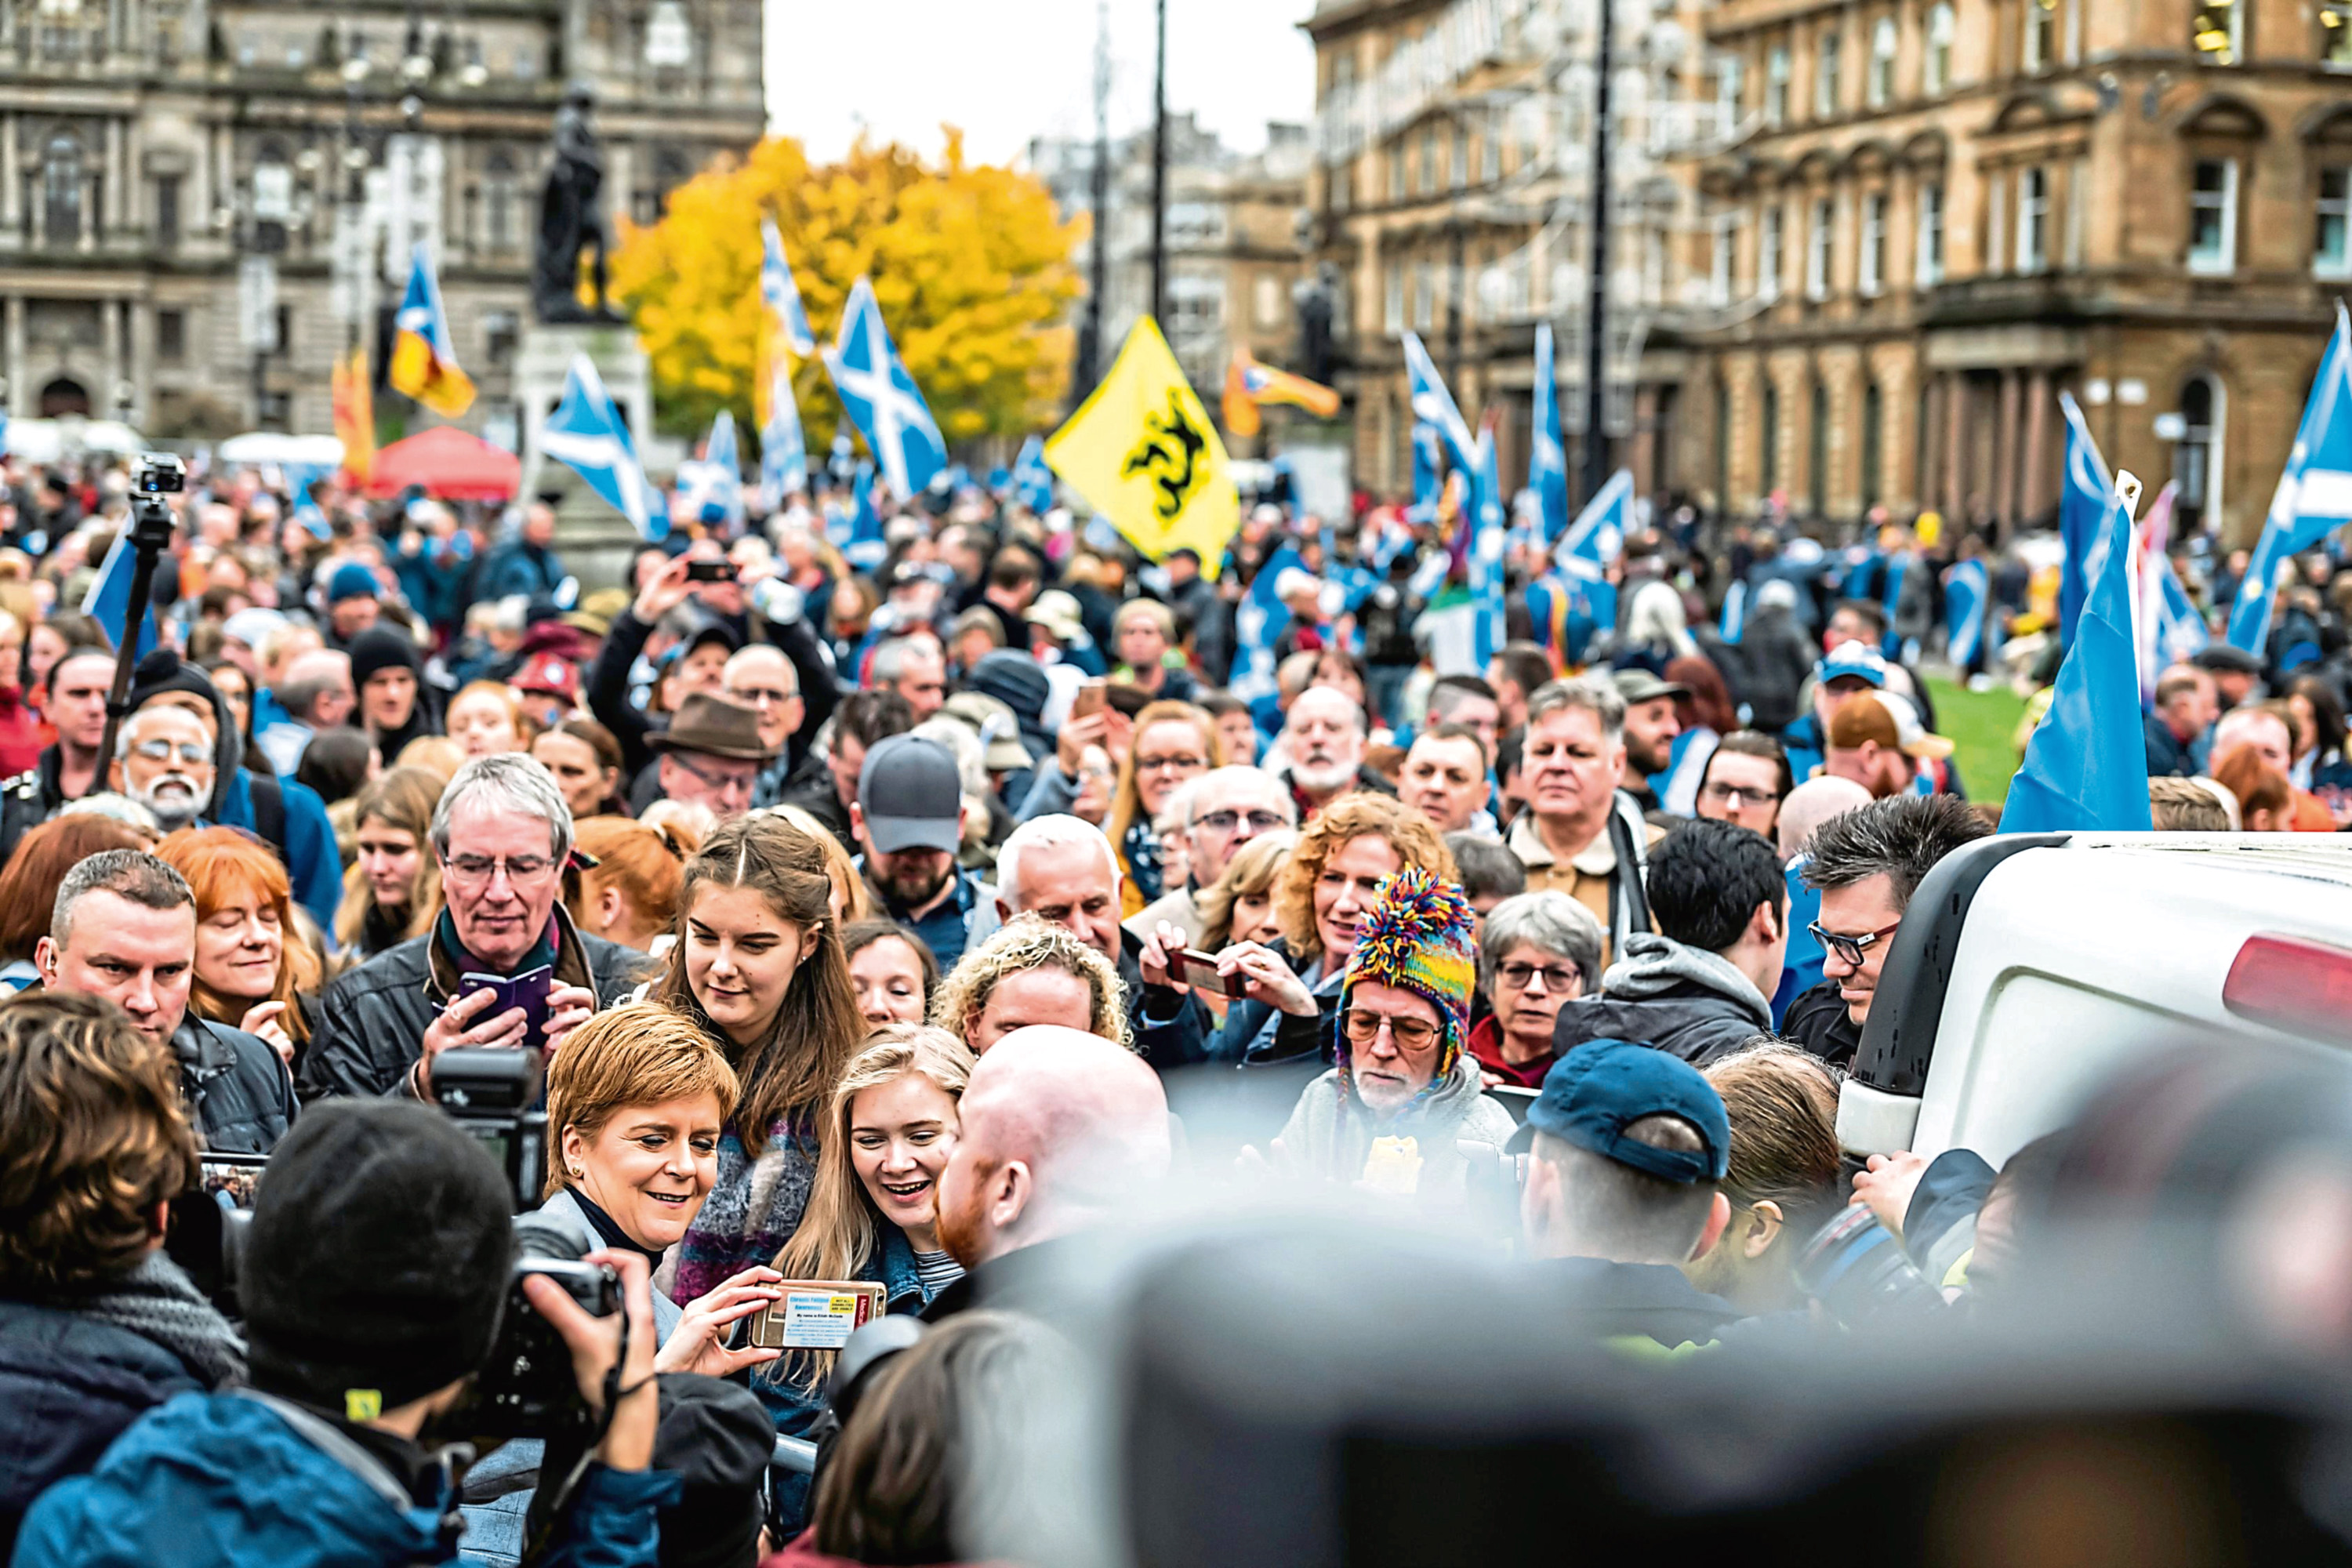 Nicola Sturgeon mingles with the crowd at George Square